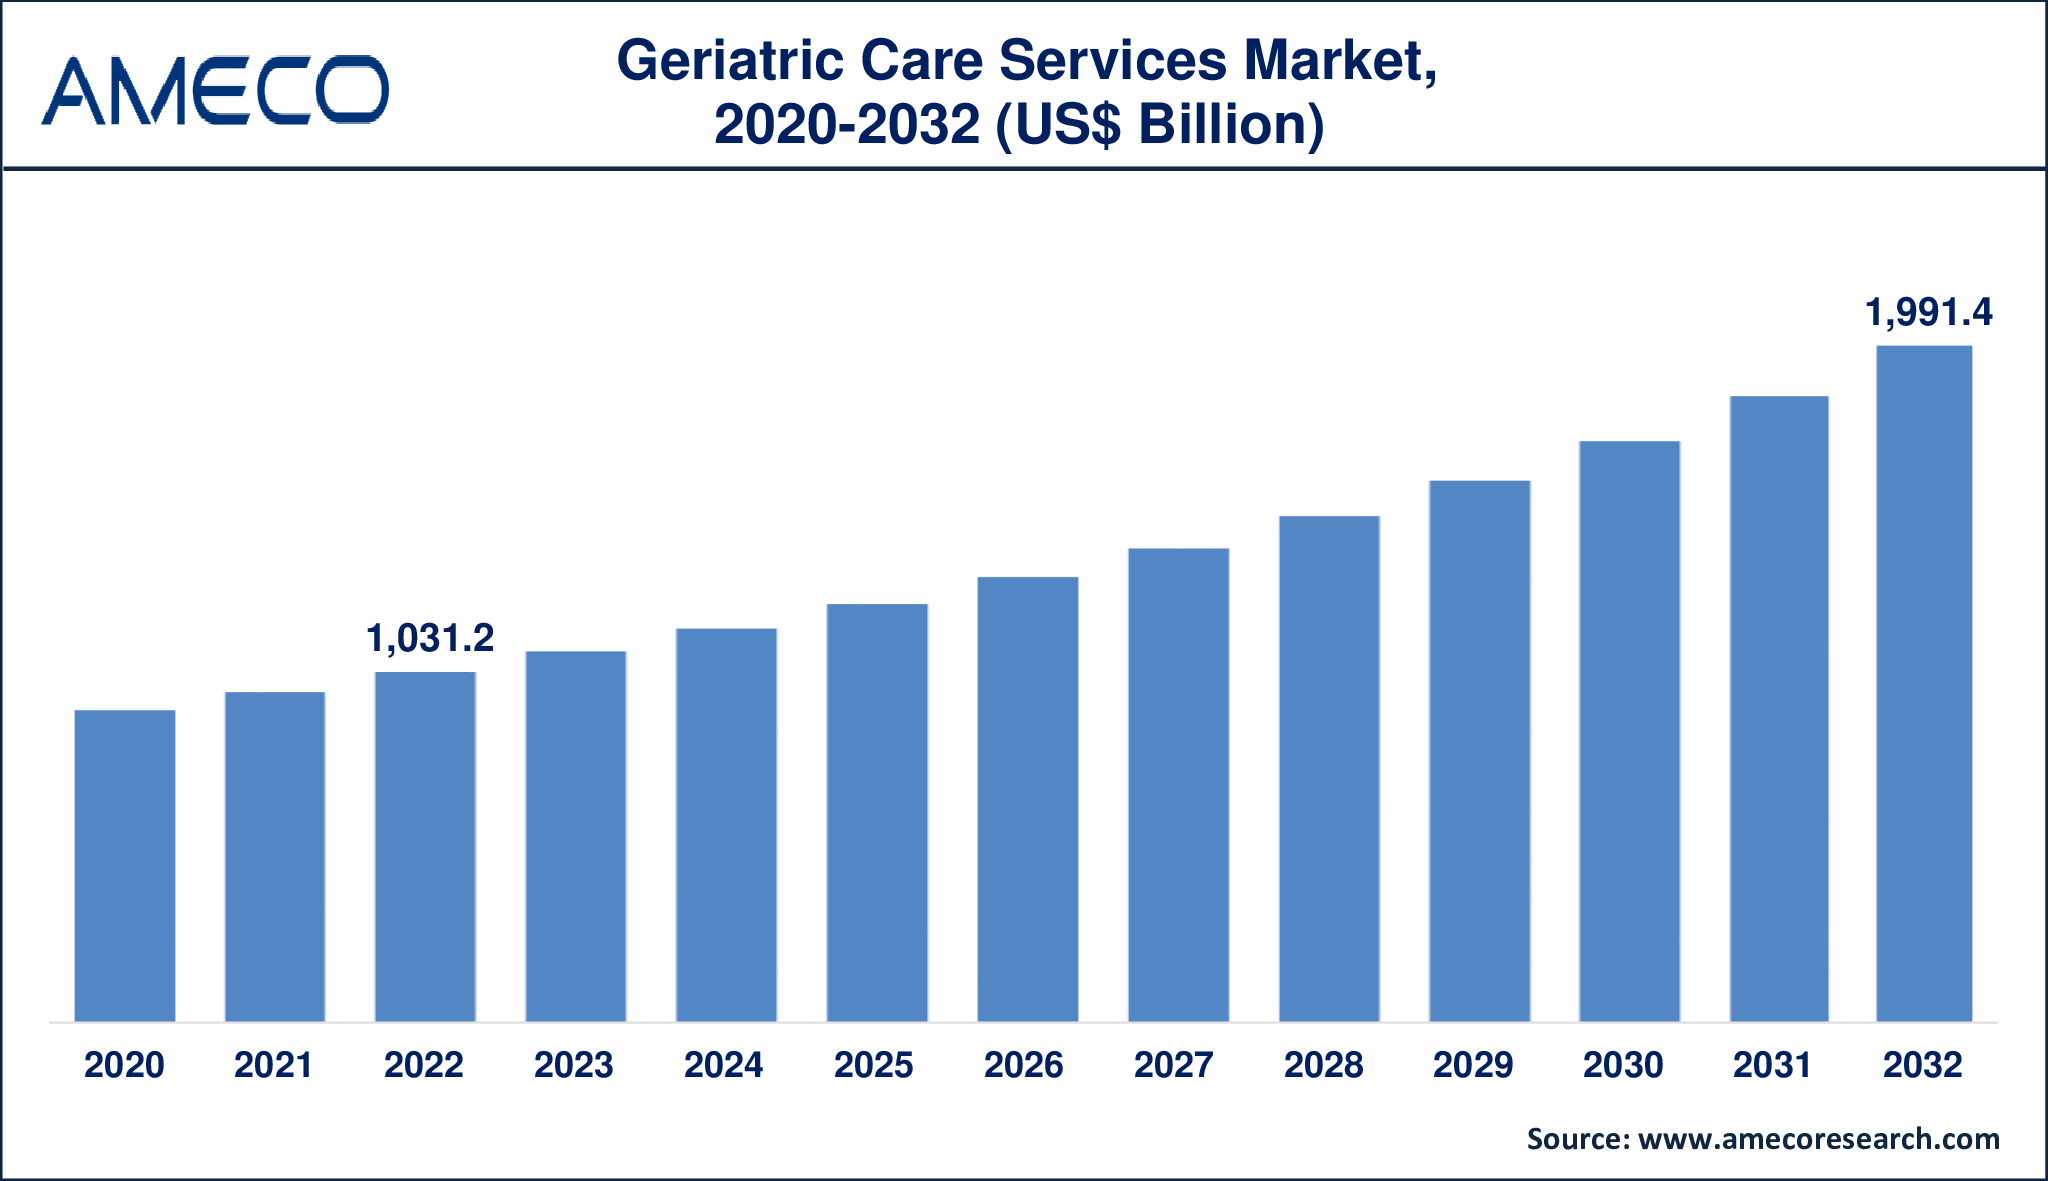 Geriatric Care Services Market Dynamics